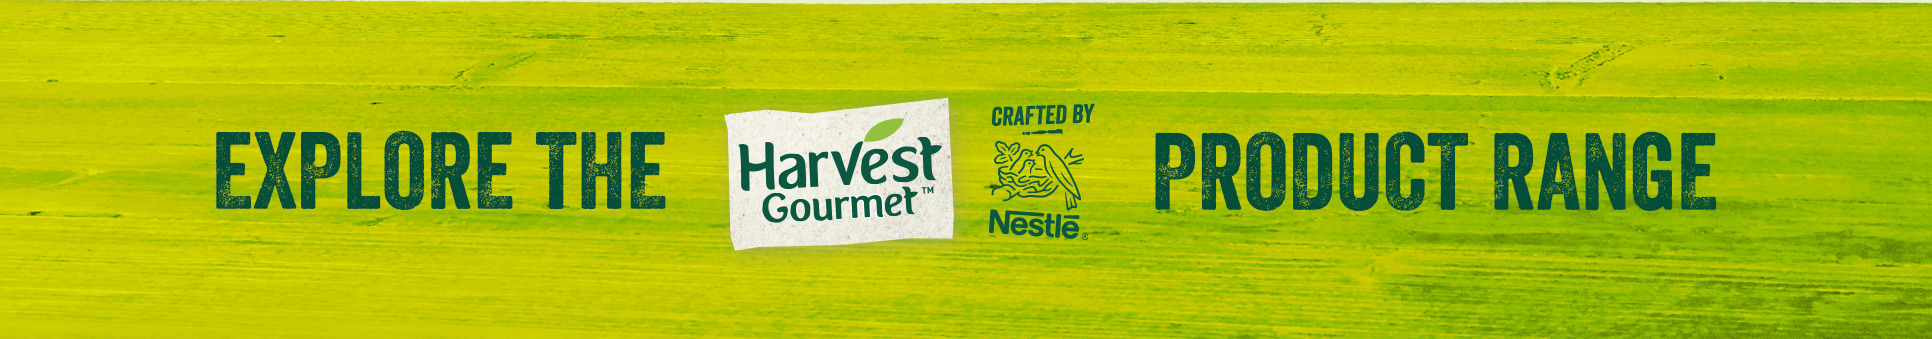 Explore the harvest gourmet product range